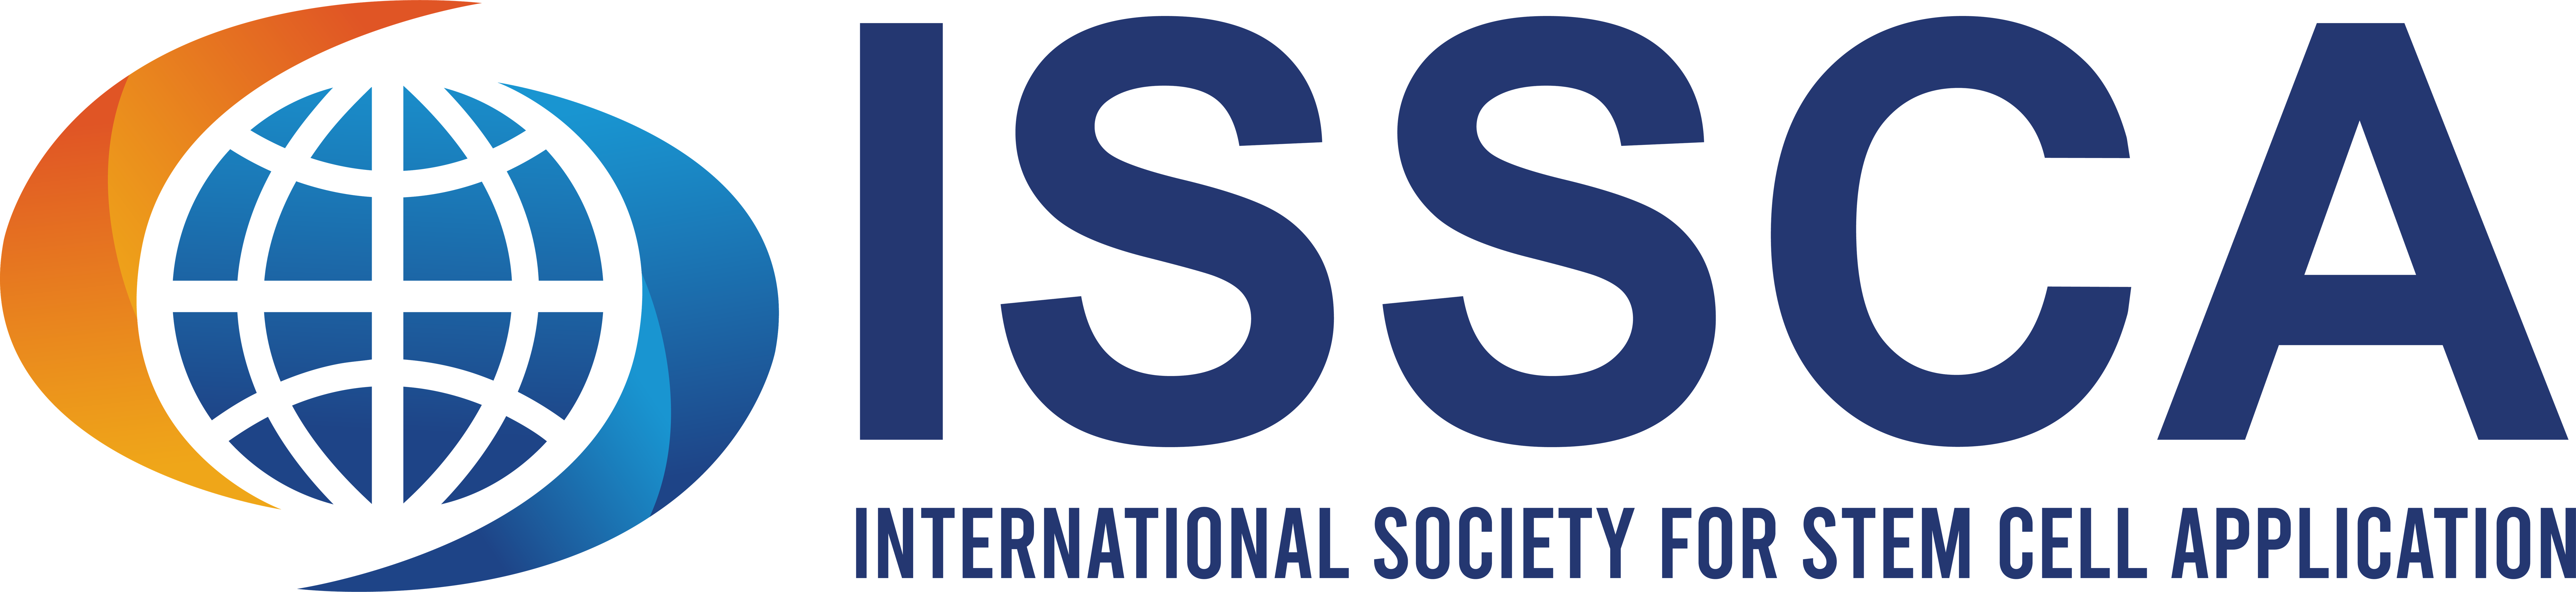 ISSCA Announces Upcoming Regenerative Medicine Conference In Iraq